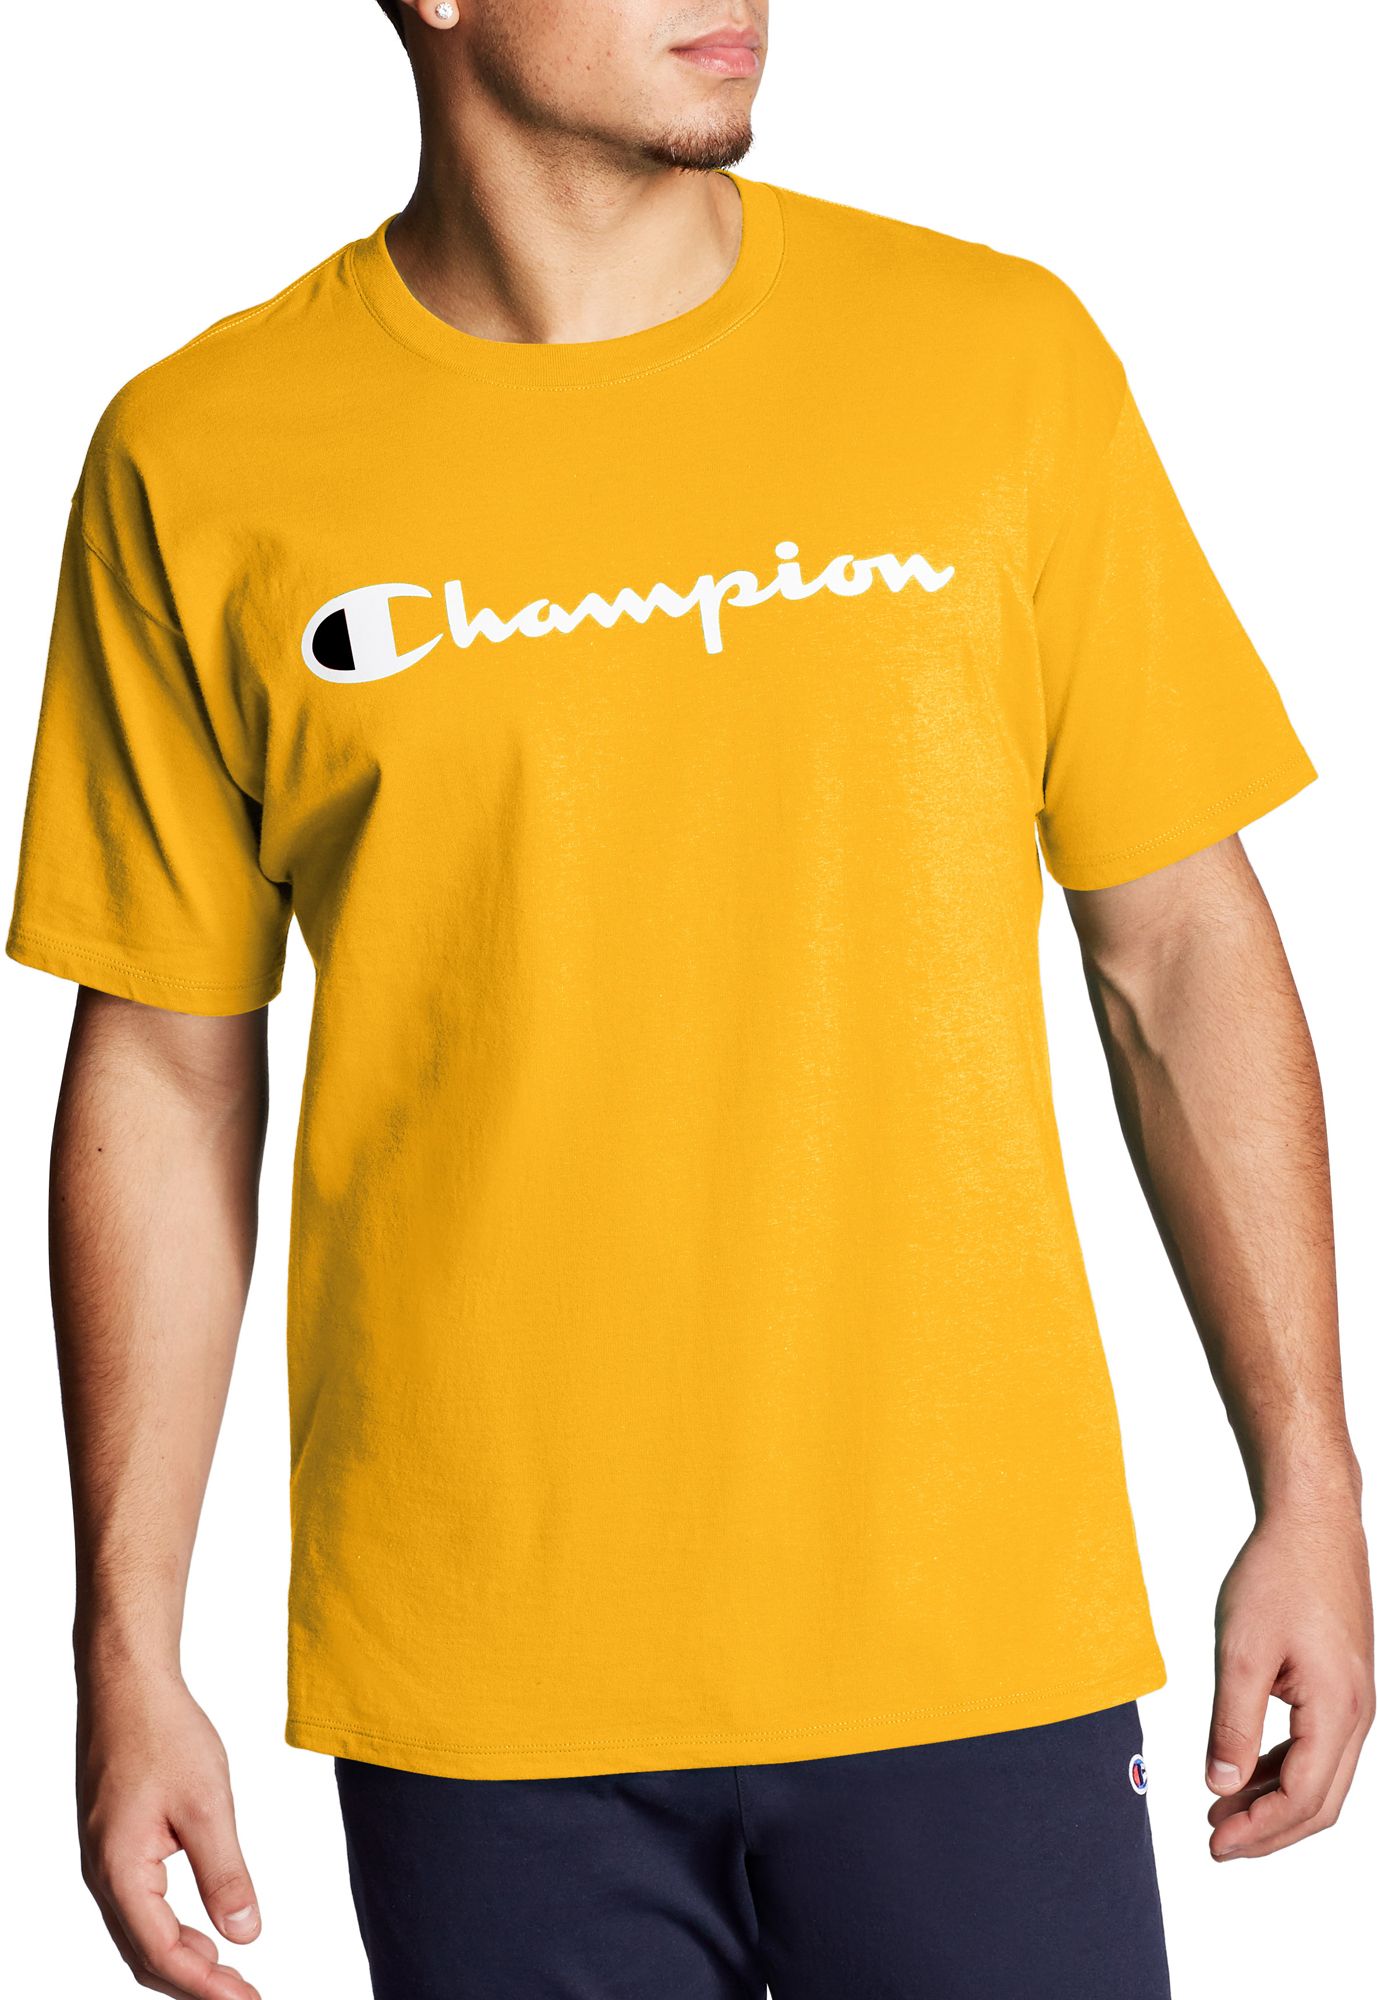 yellow champion shirt men